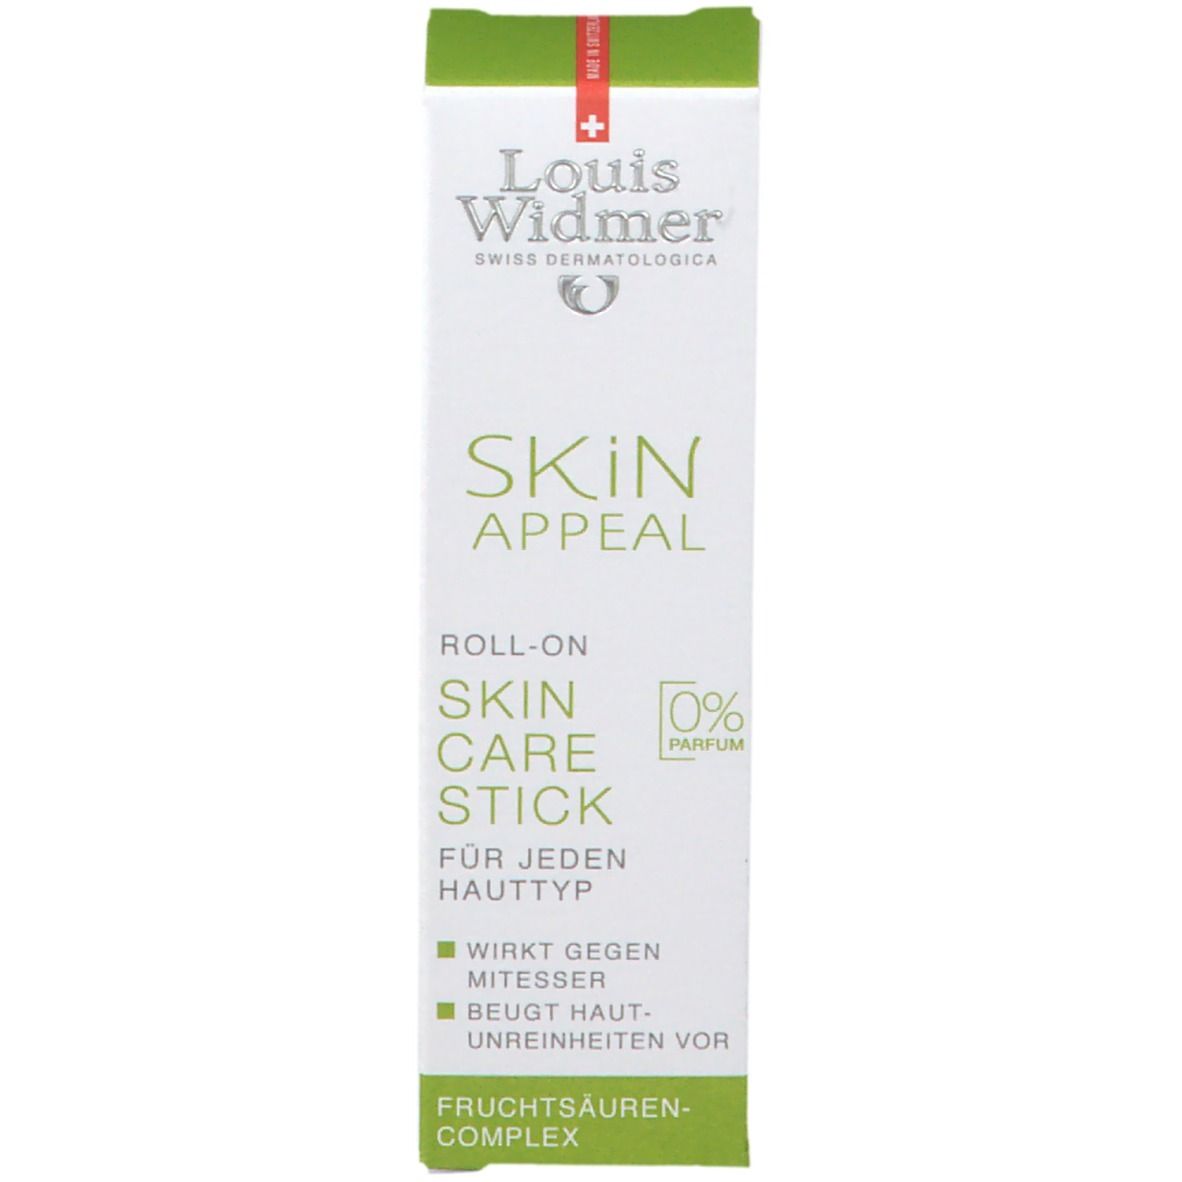 Louis Widmer Skin Appeal Skin Care Stick